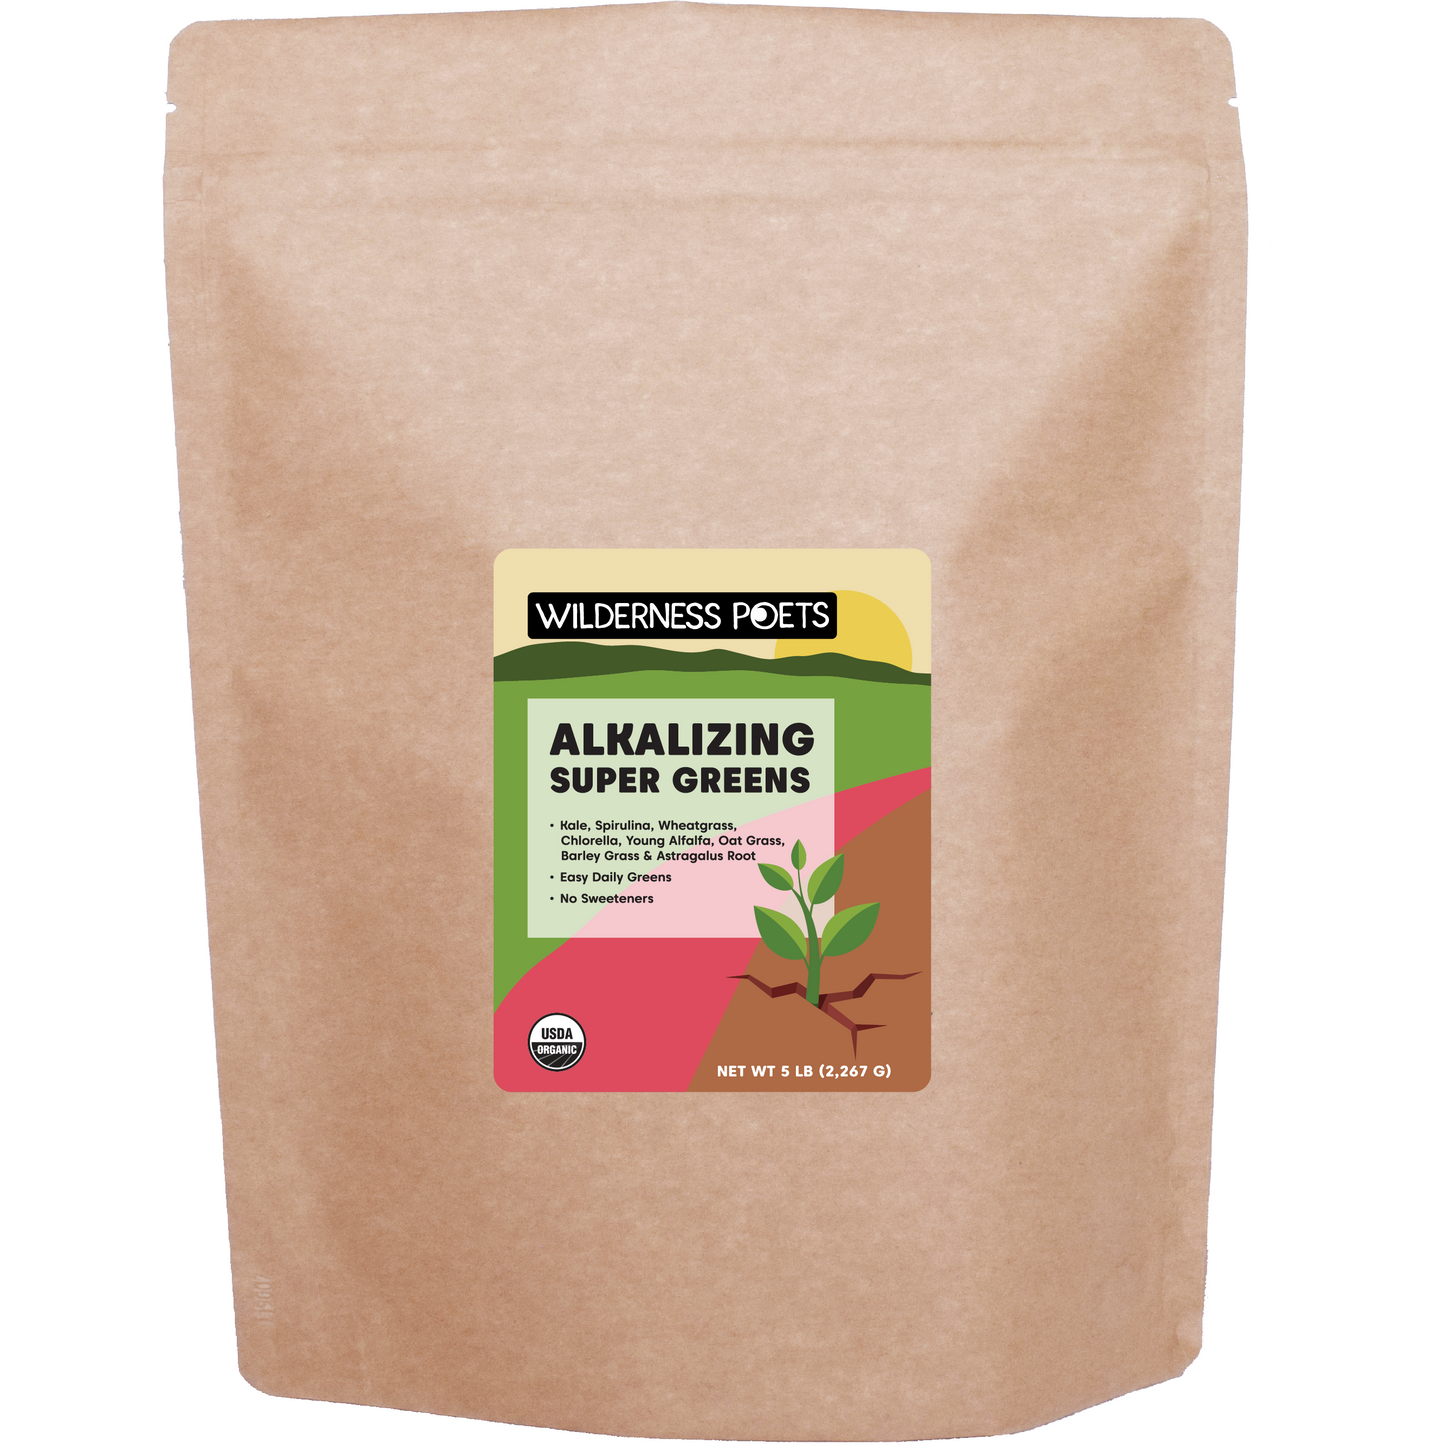 Alkalizing Super Greens - Organic